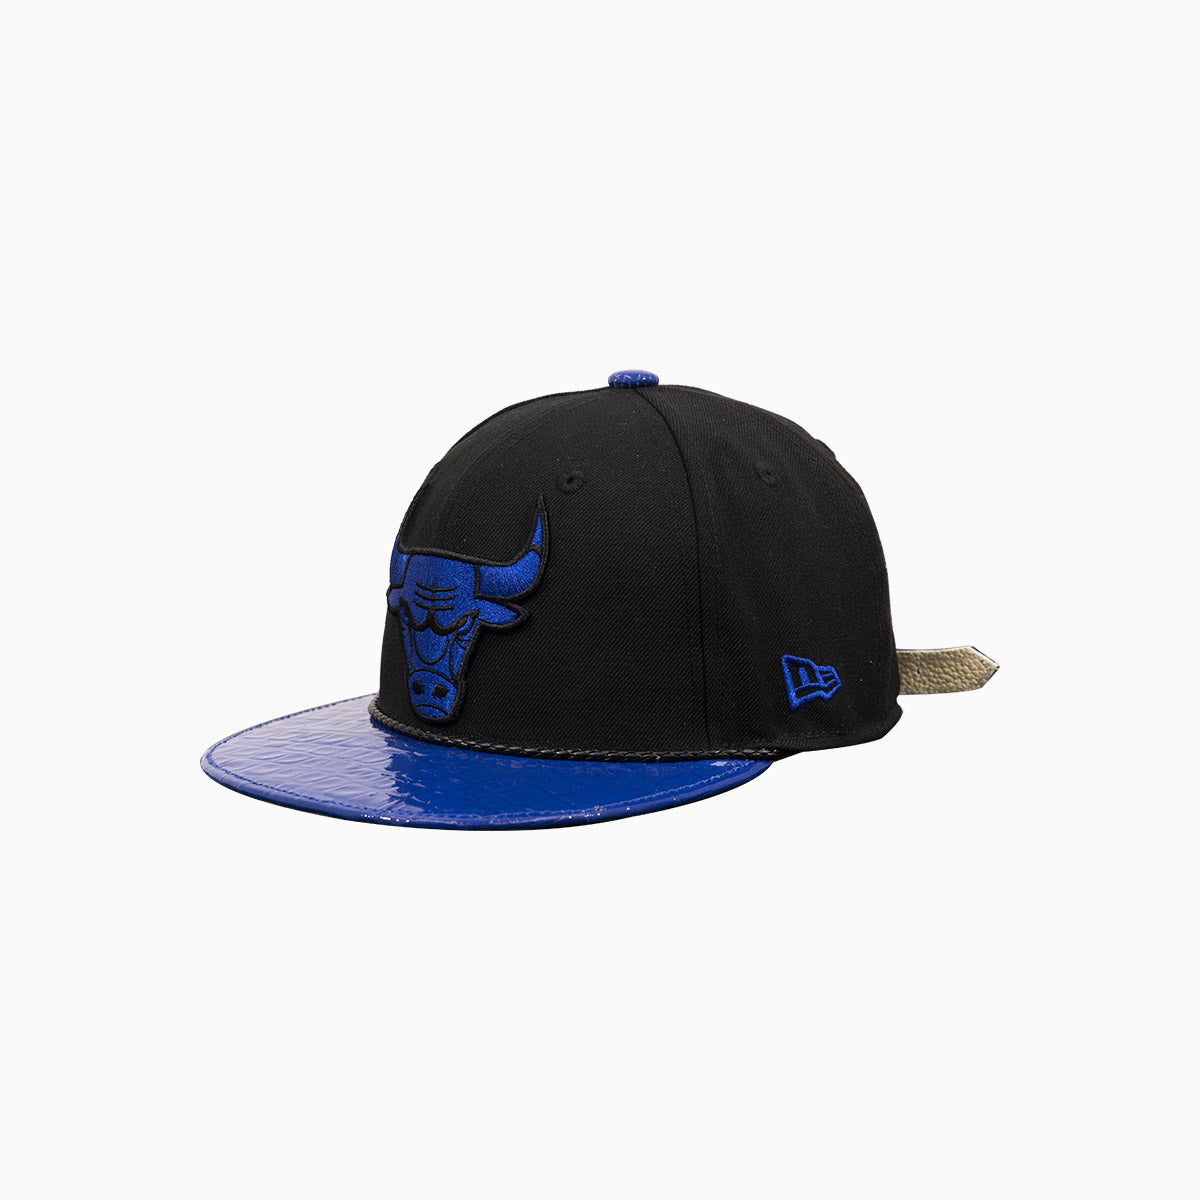 breyers-buck-50-chicago-bulls-hat-with-leather-visor-breyers-tcbh-black-blue